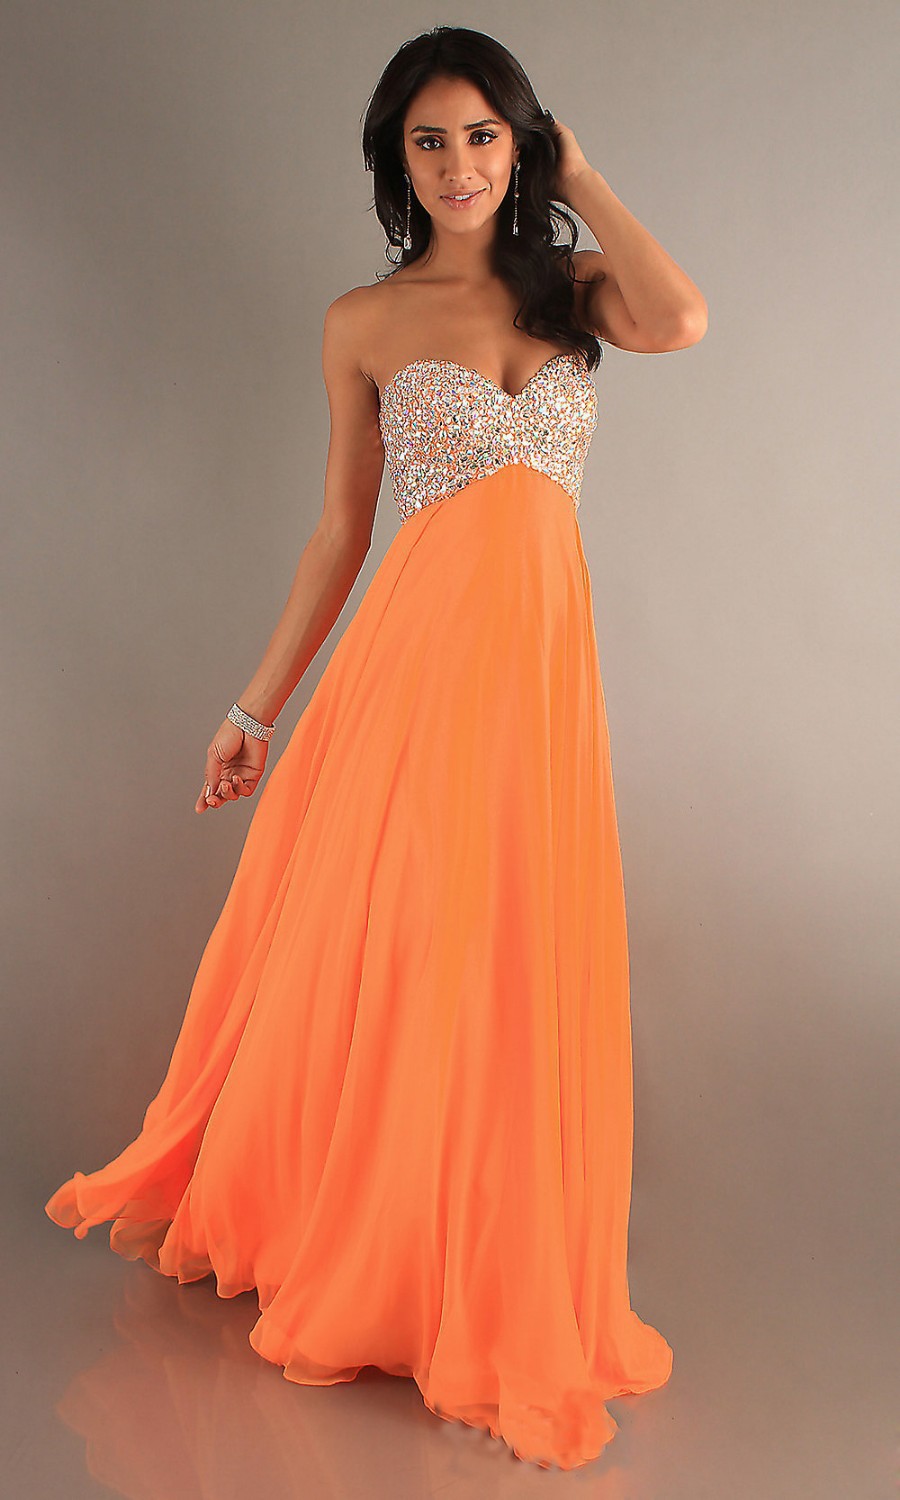 ... -Pink-Orange-Lime-Green-Chiffon-Floor-Length-Prom-Dress-Open-Back.jpg